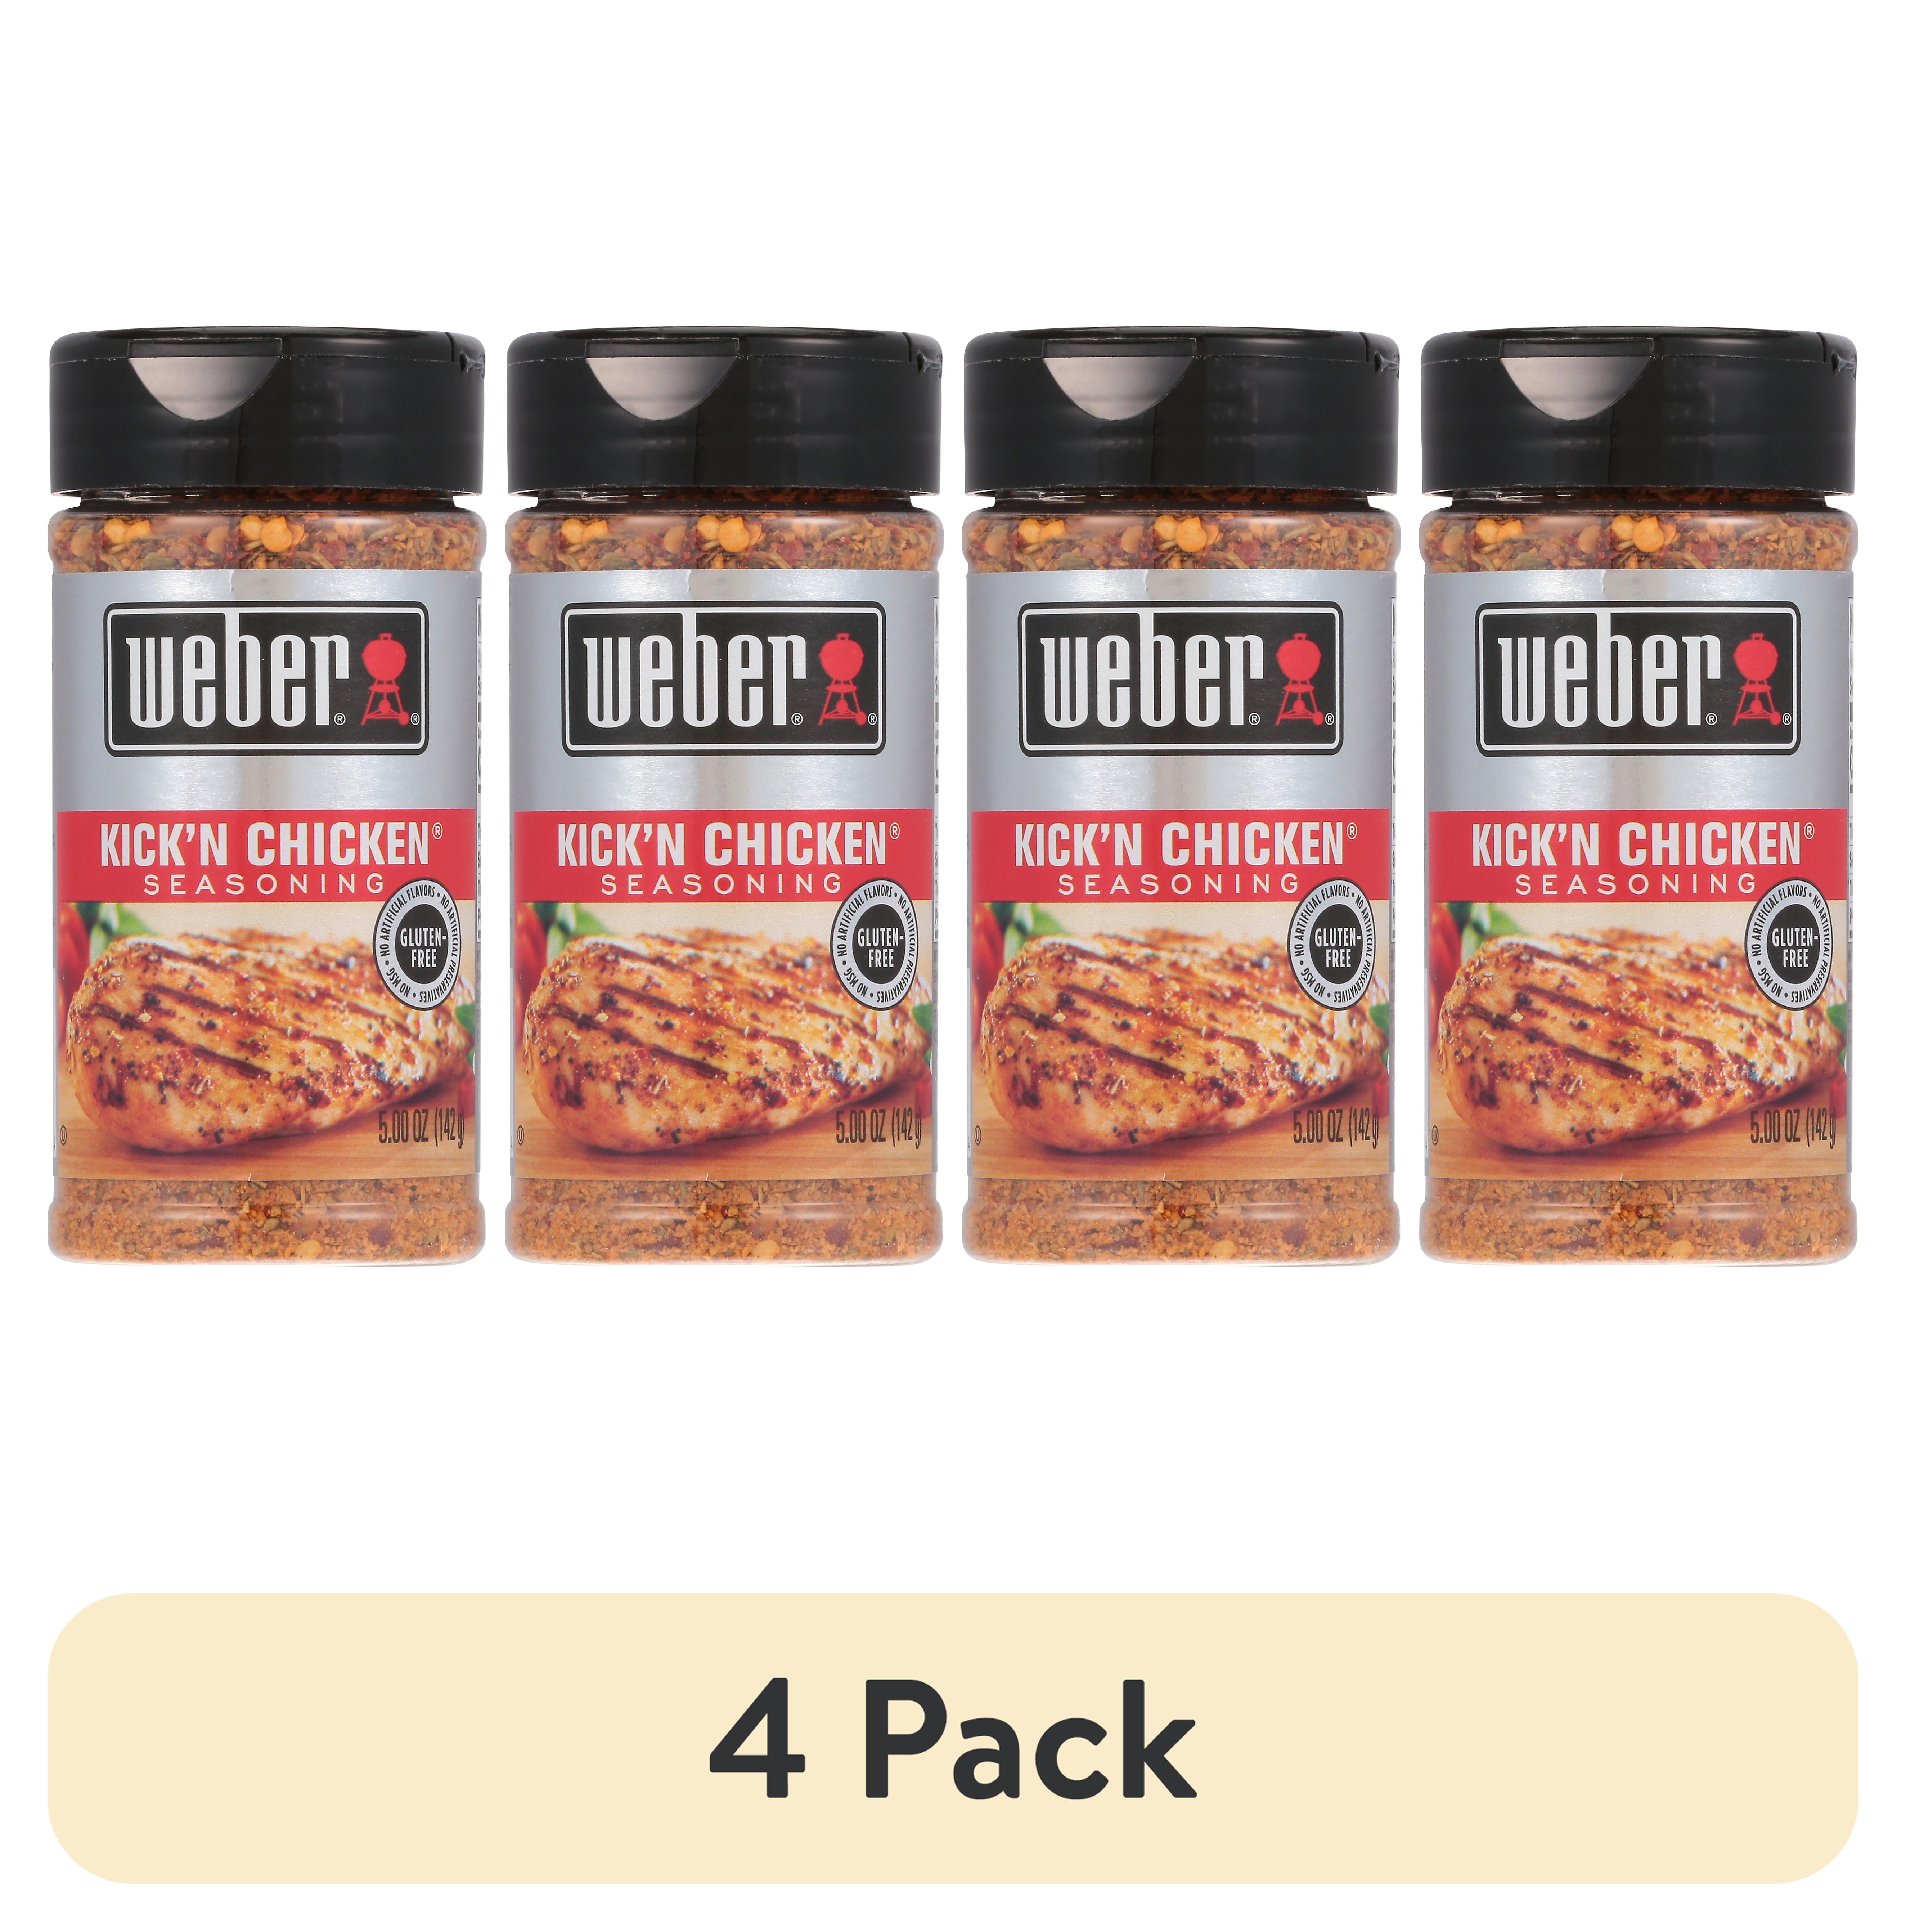 Weber Kick'n Chicken 7.25 oz Seasoning Mix Meat Spice Rub Family Size